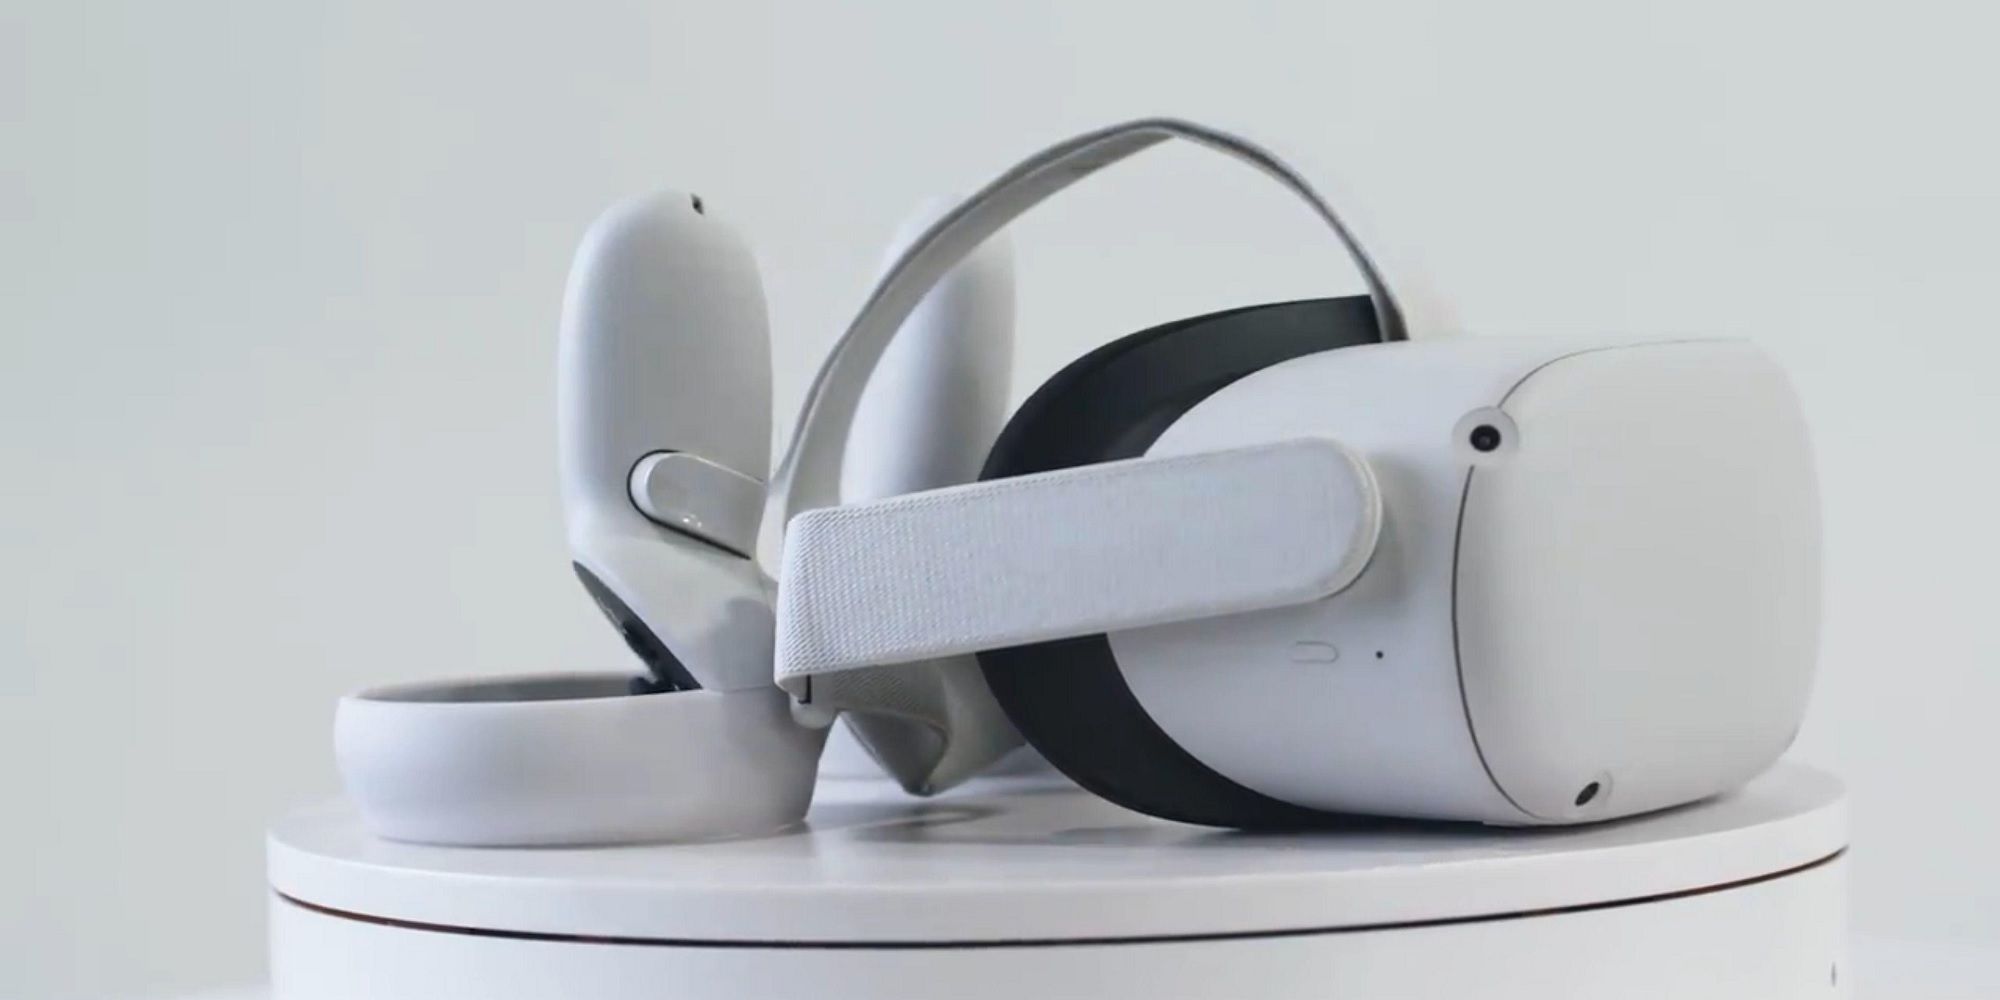 Oculus Quest 2 VR headset.